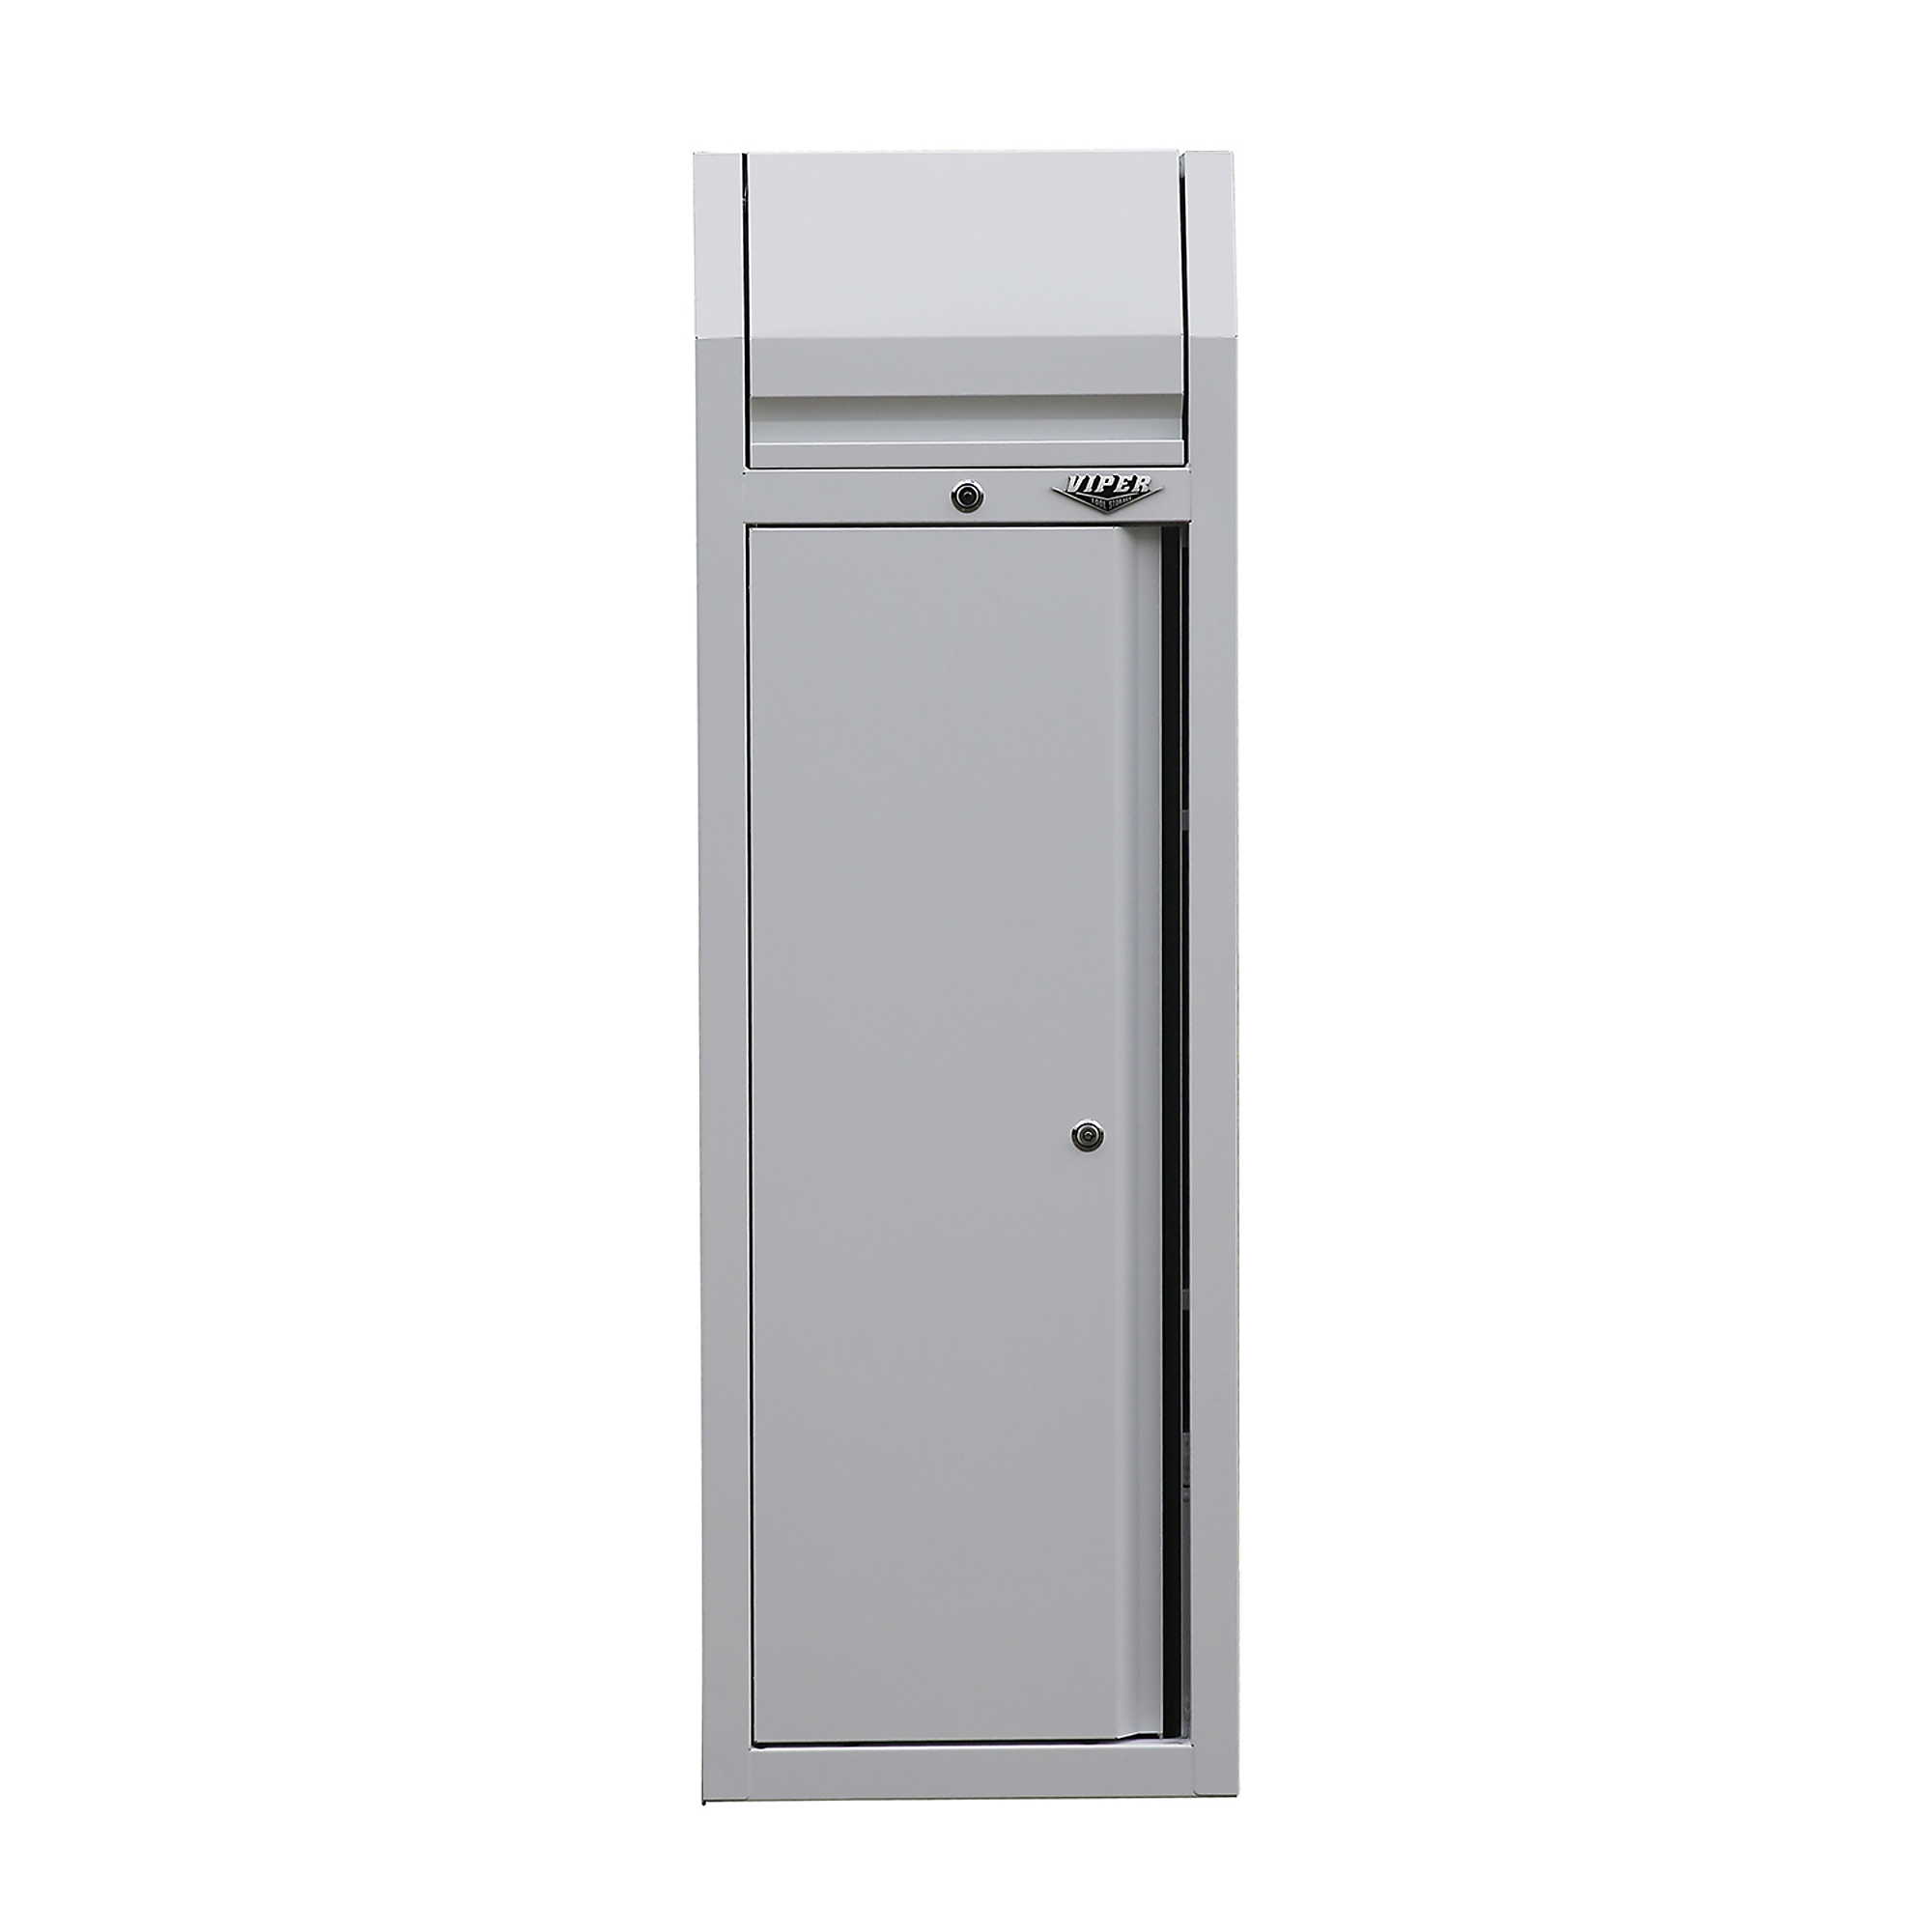 Viper Tool Storage, 3-Shelf Steel Side Locker, White, Width 19.63 in, Height 67 in, Color White, Model V2003SLWH